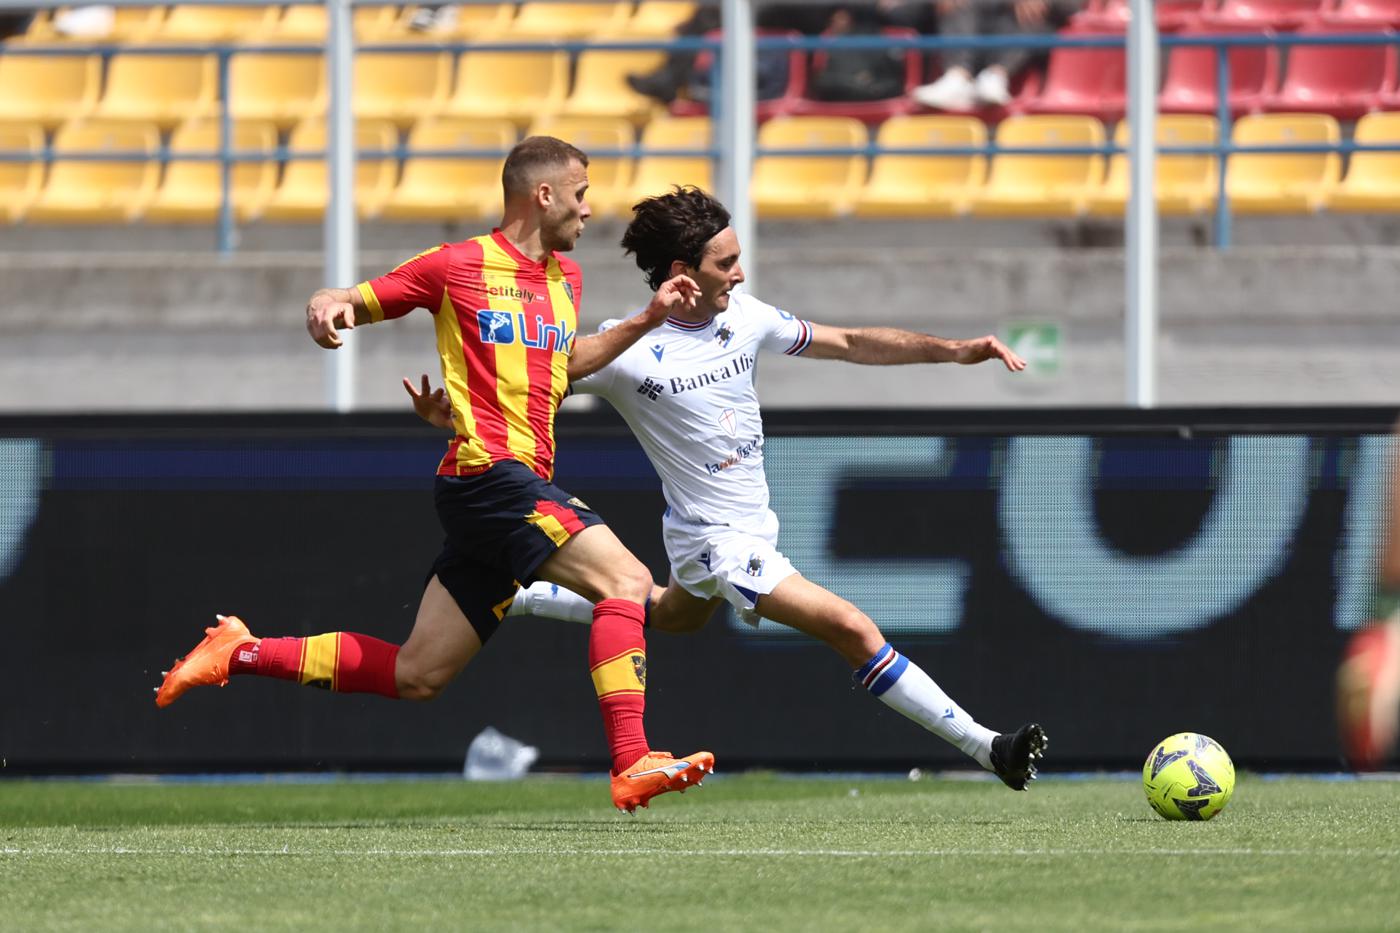 Lecce - Sampdoria - 1:1. Italian Championship, round 30. Match review,